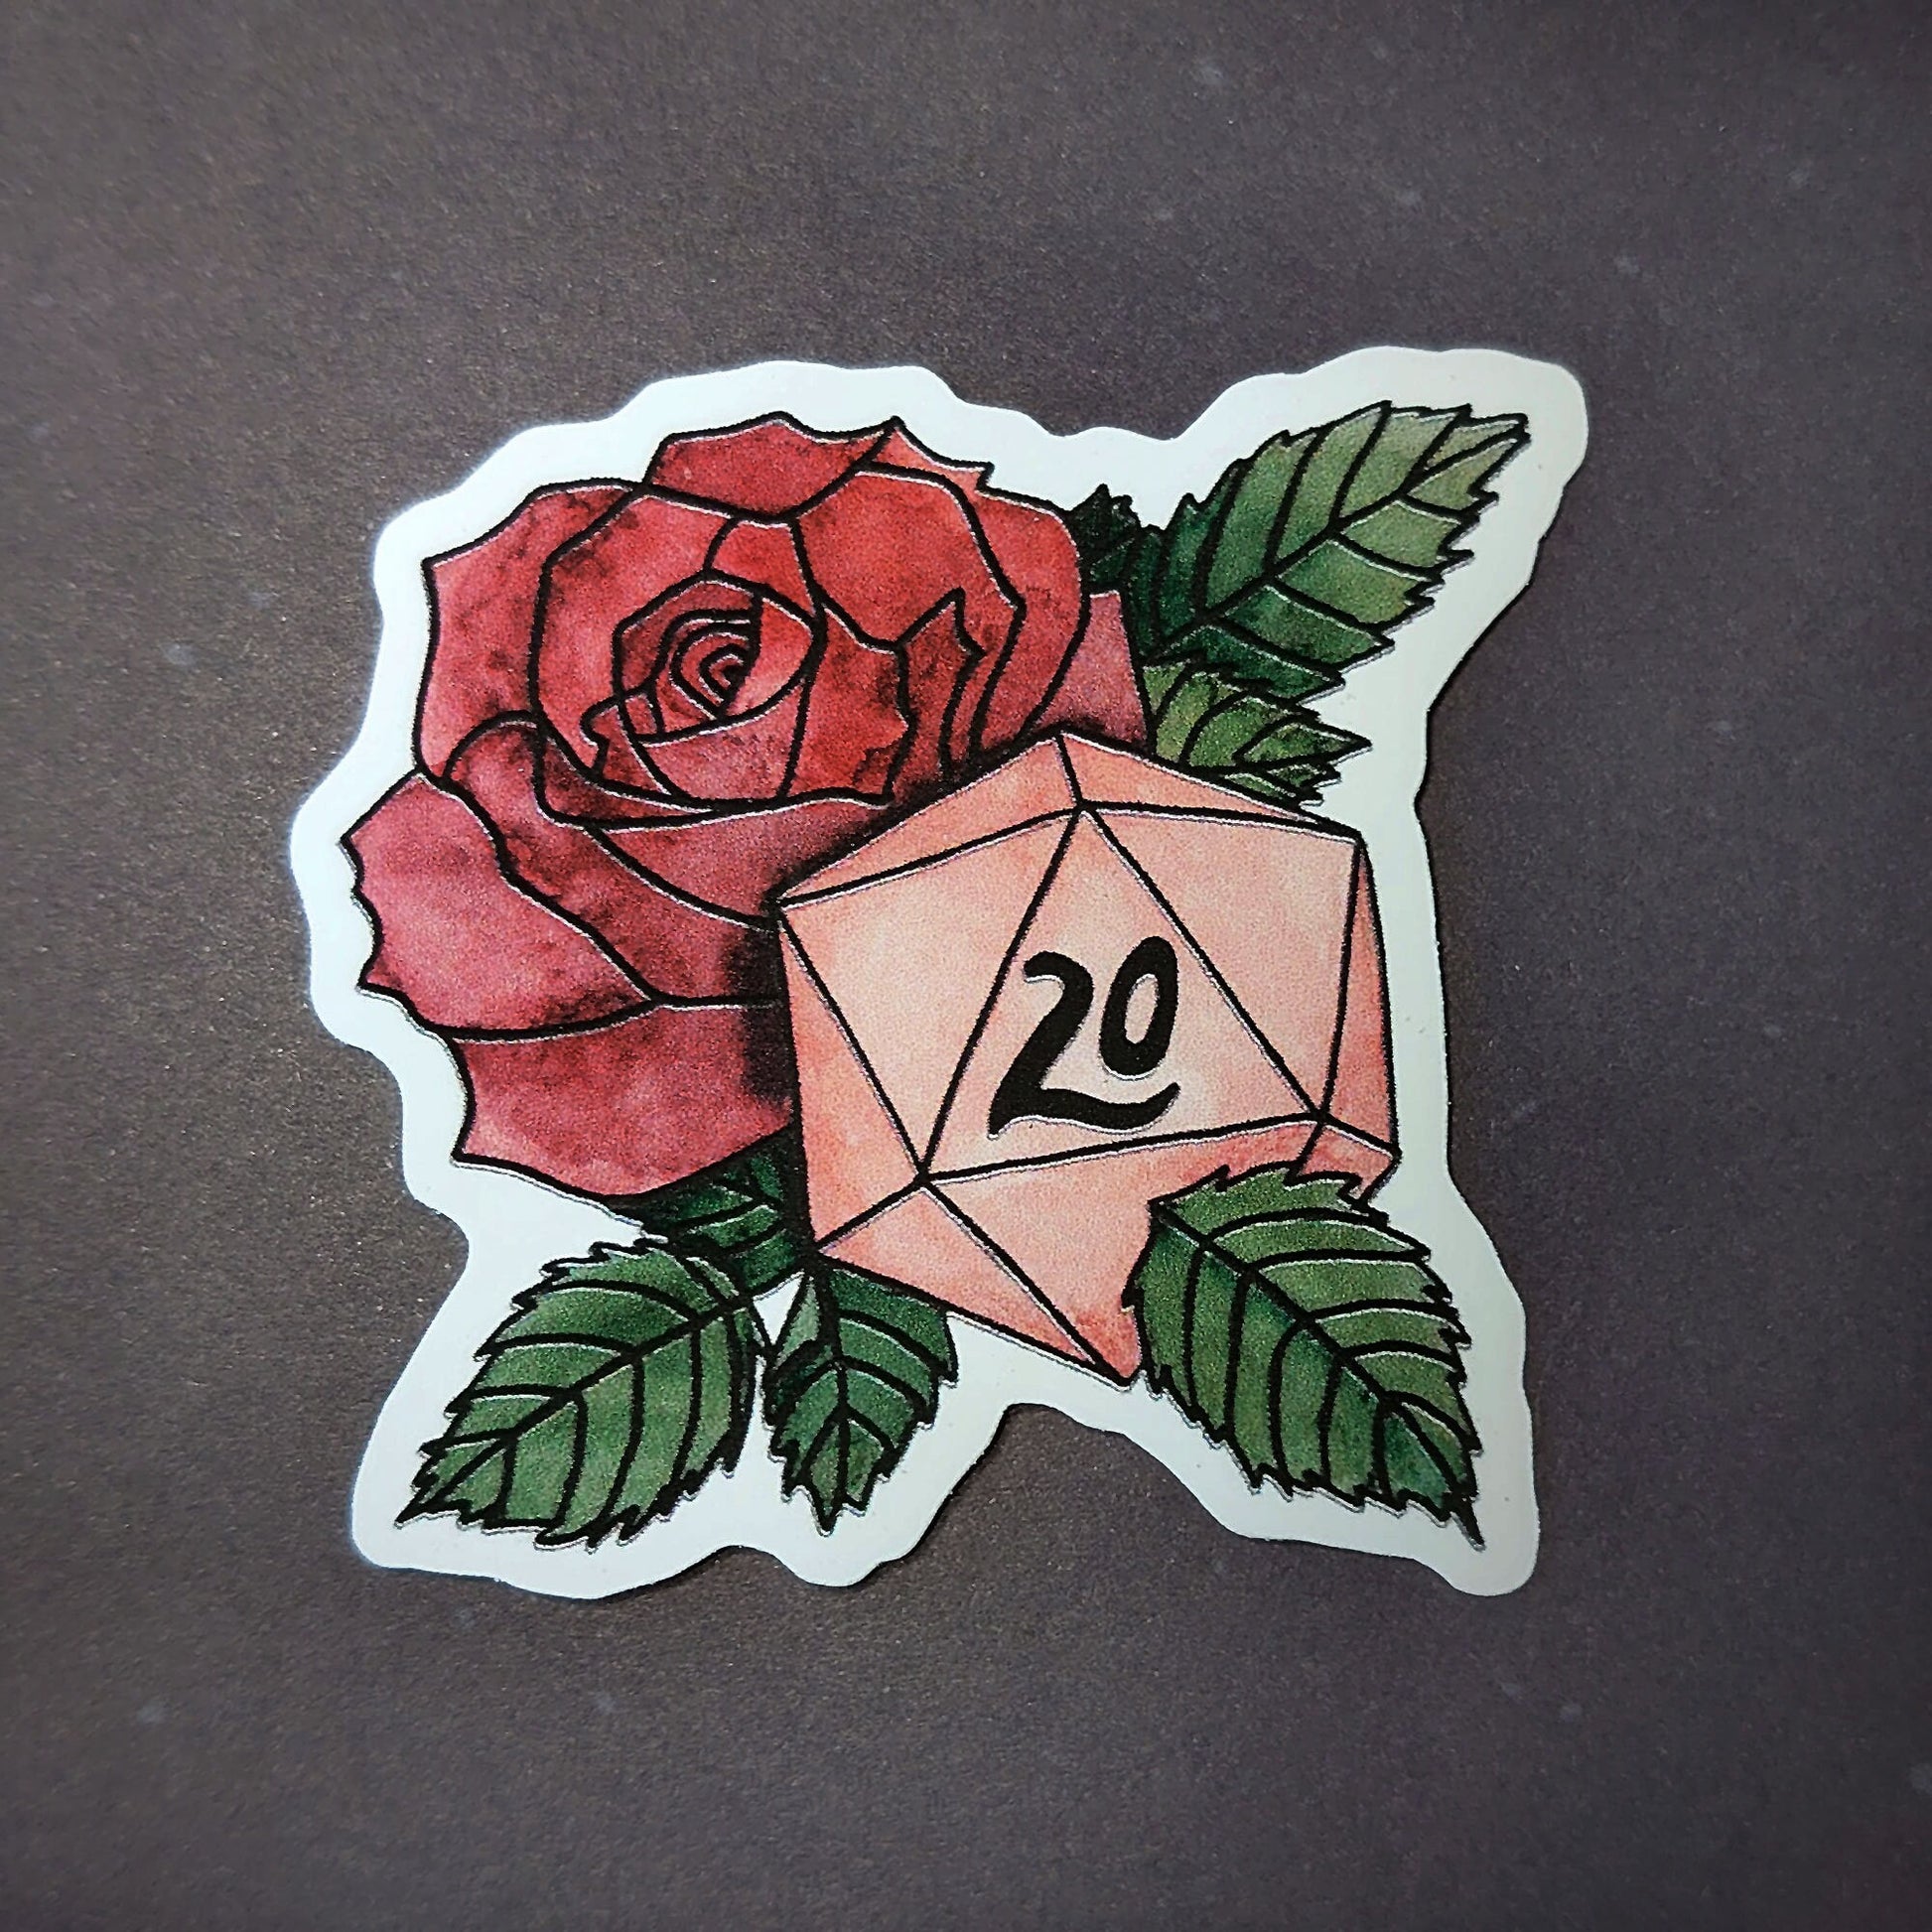 Dnd Sticker - Druid Sticker D20 with rose - Different Sizes